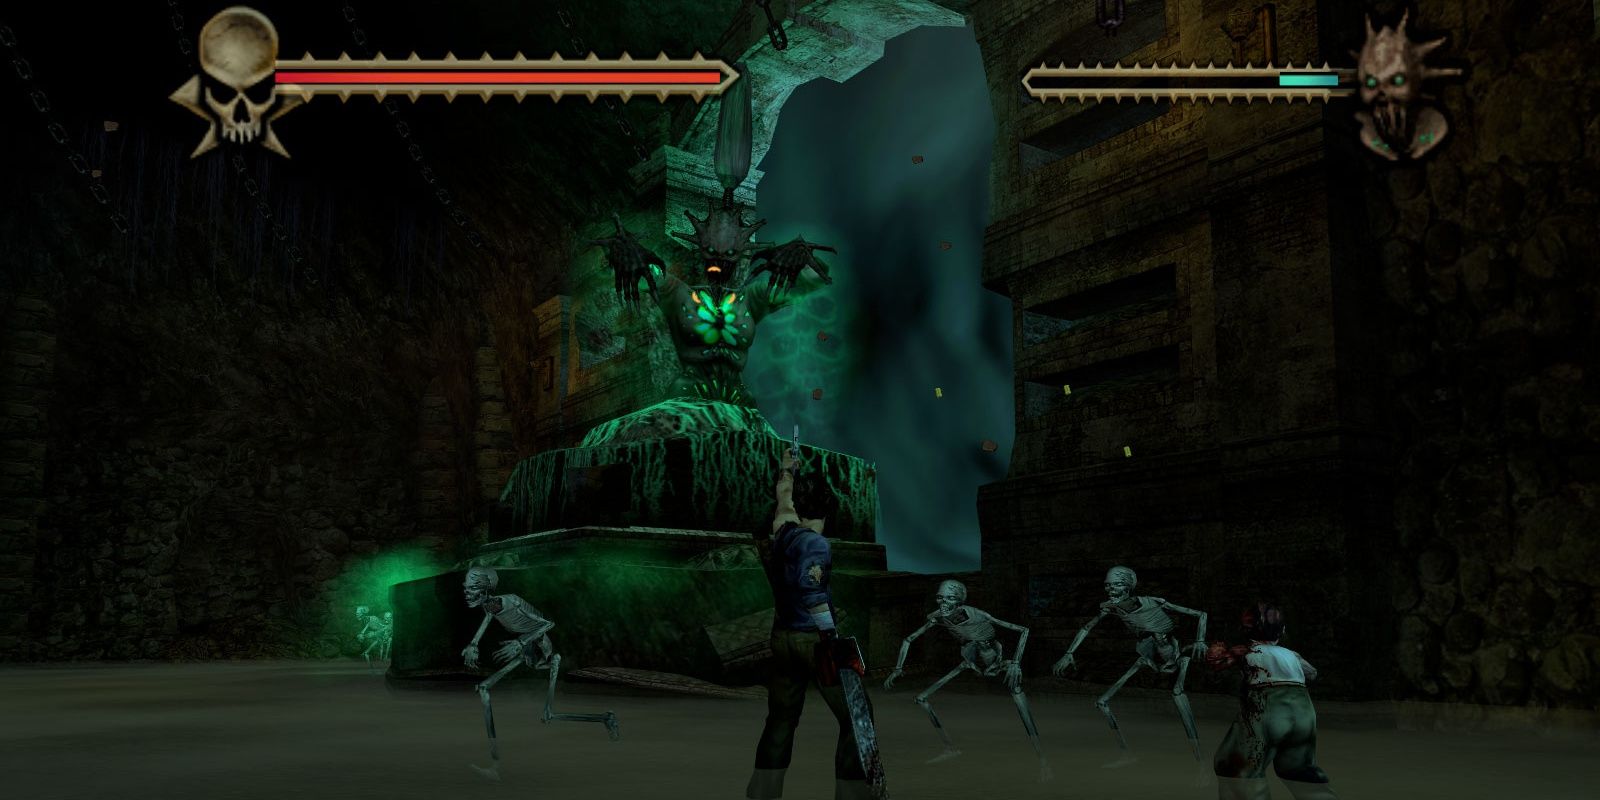 Ash killing skeletons in the game Evil Dead: Regeneration